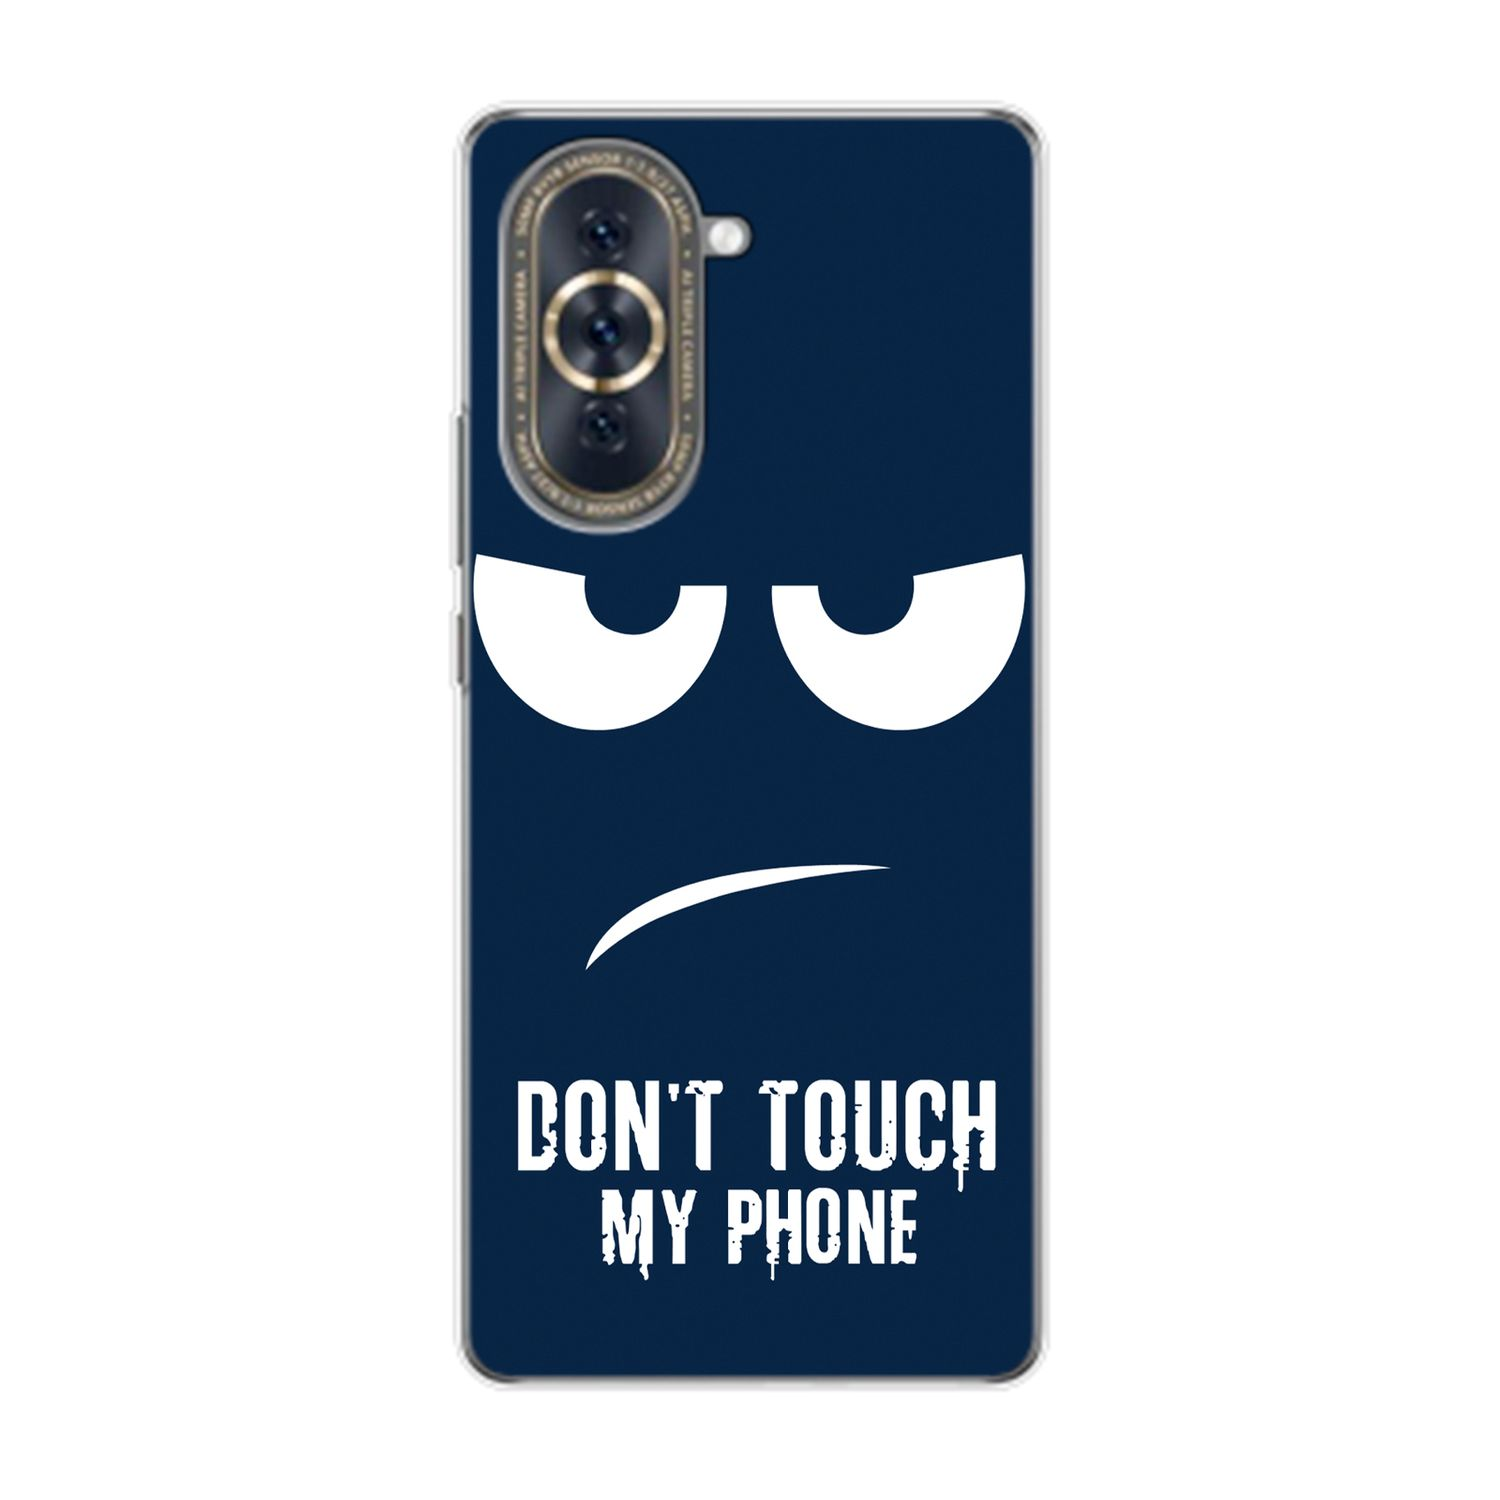 Case, Touch Dont My Backcover, Phone Huawei, Blau DESIGN KÖNIG nova 10,